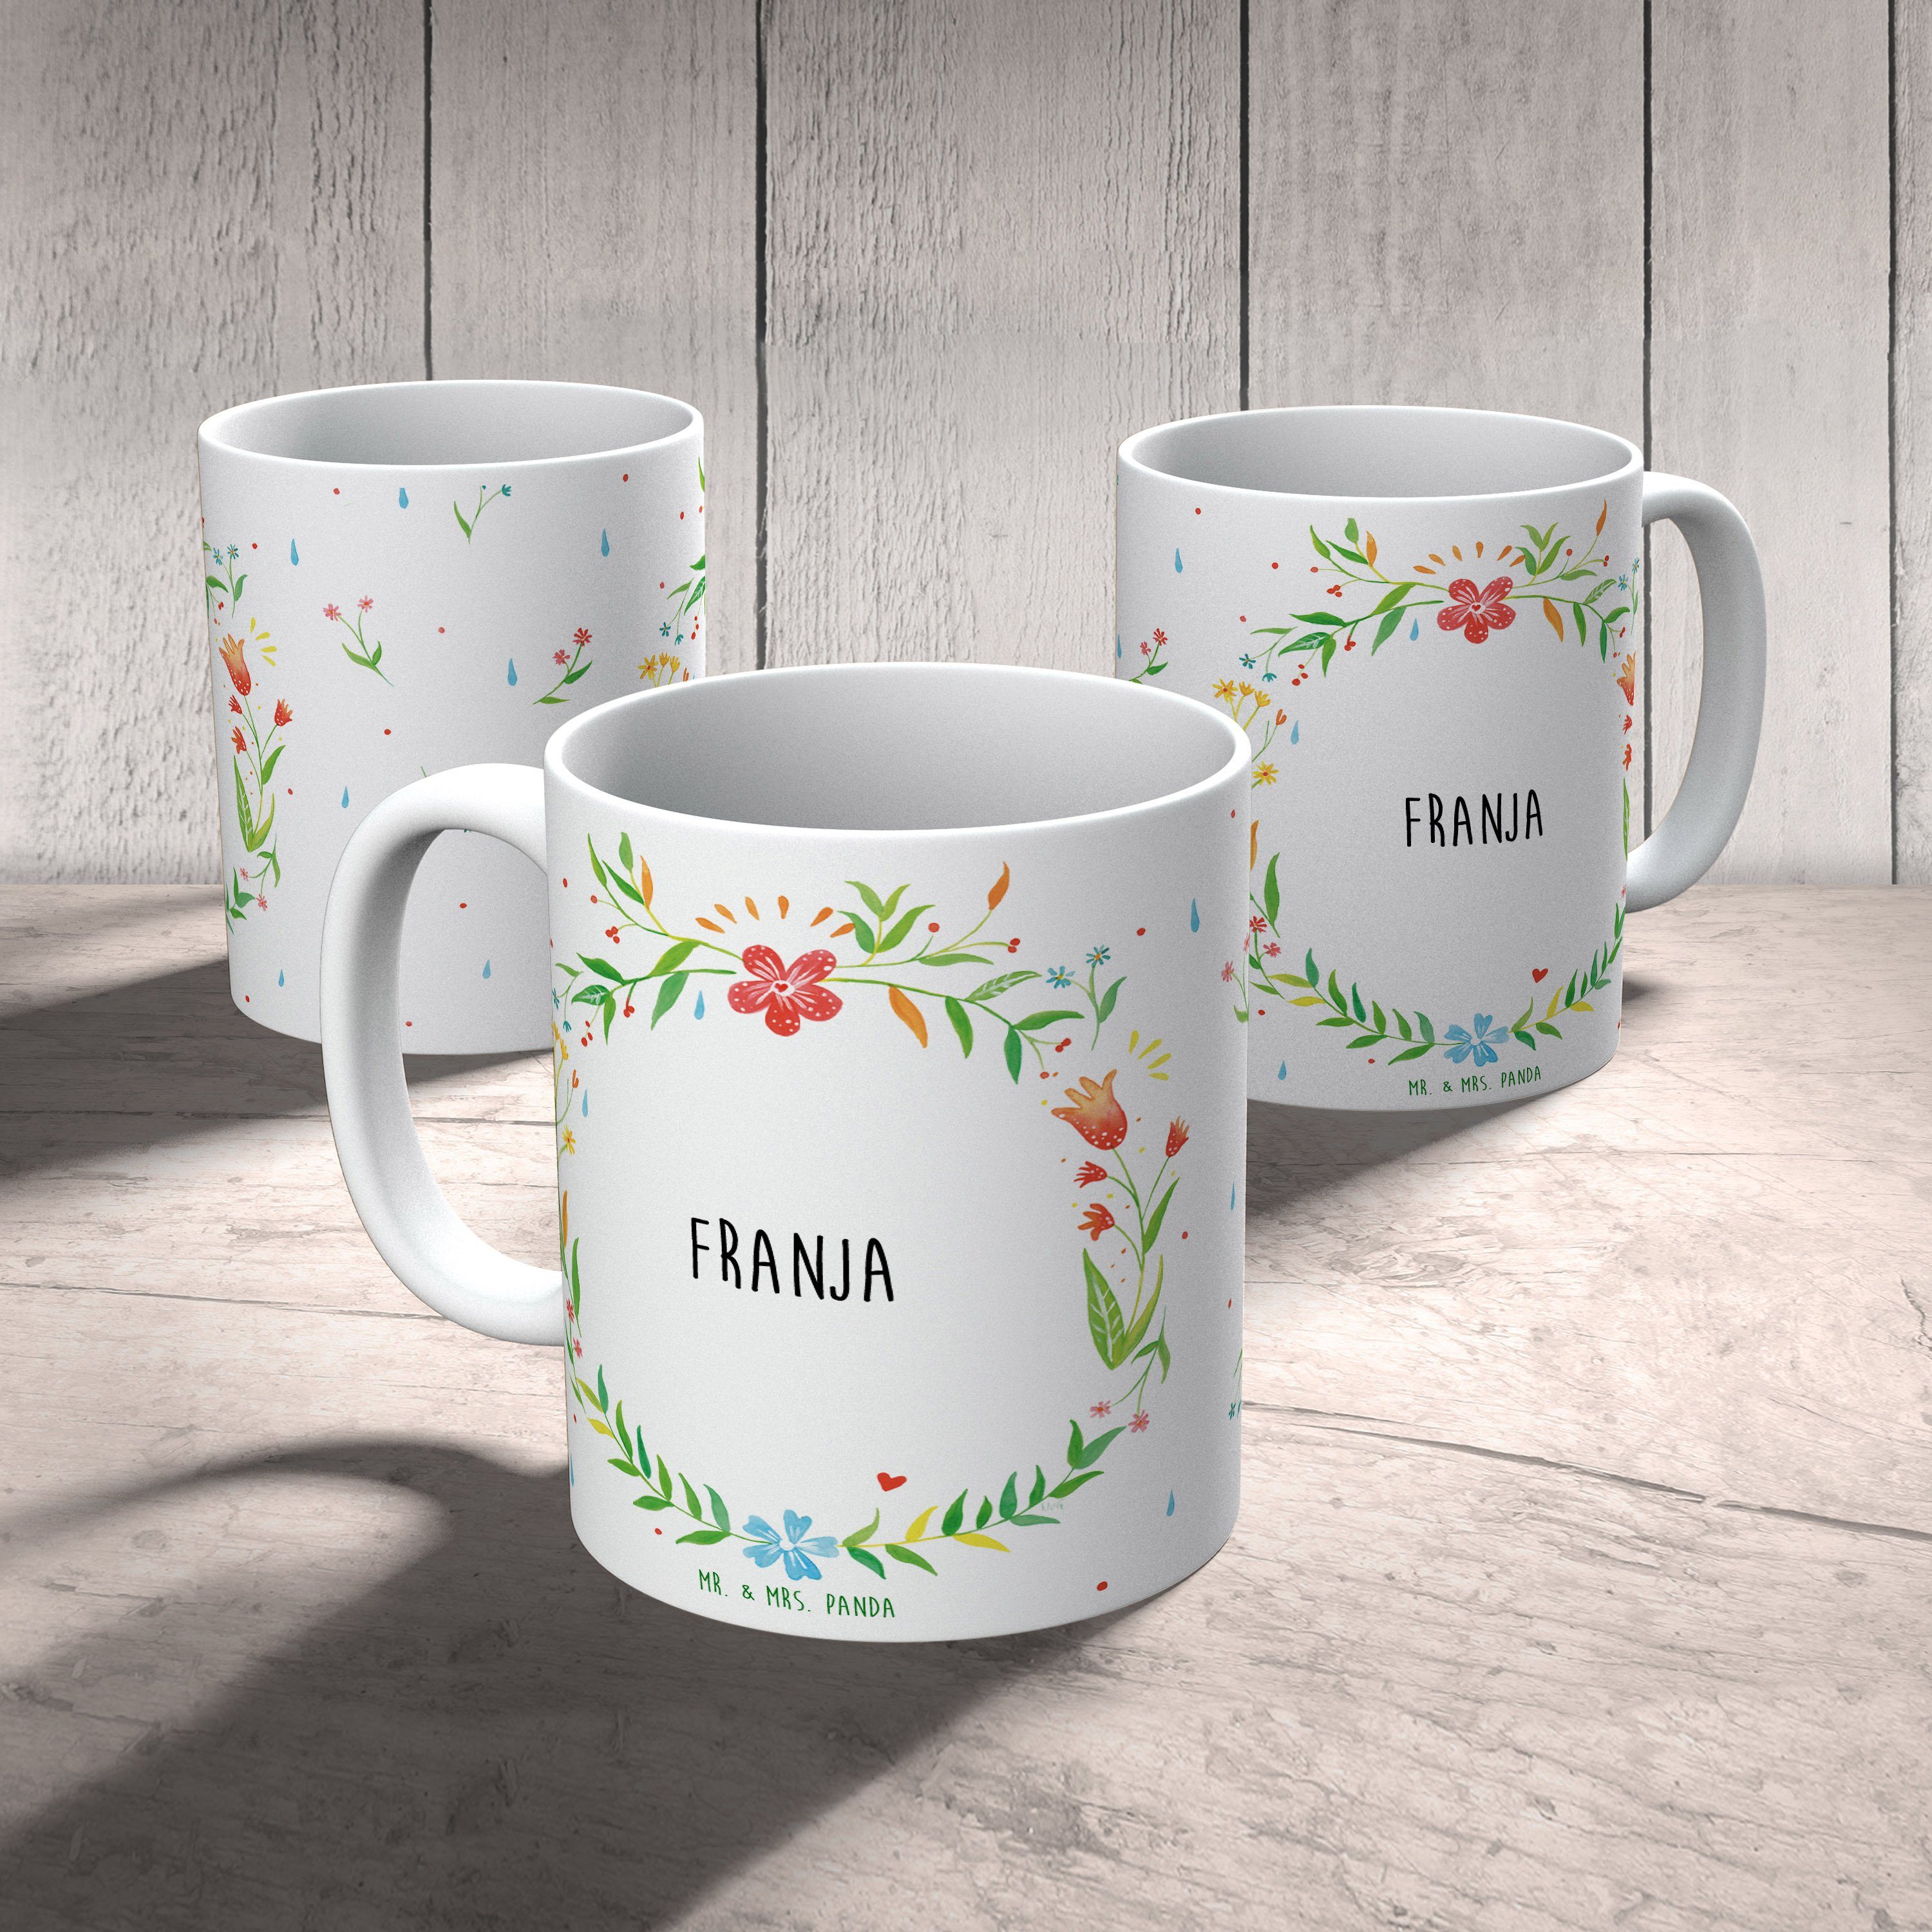 Mr. & Mrs. Panda Keramik Geschenk, Tasse Franja Tasse Kaffeetasse, Kera, Tasse, - Tasse, Motive, Büro